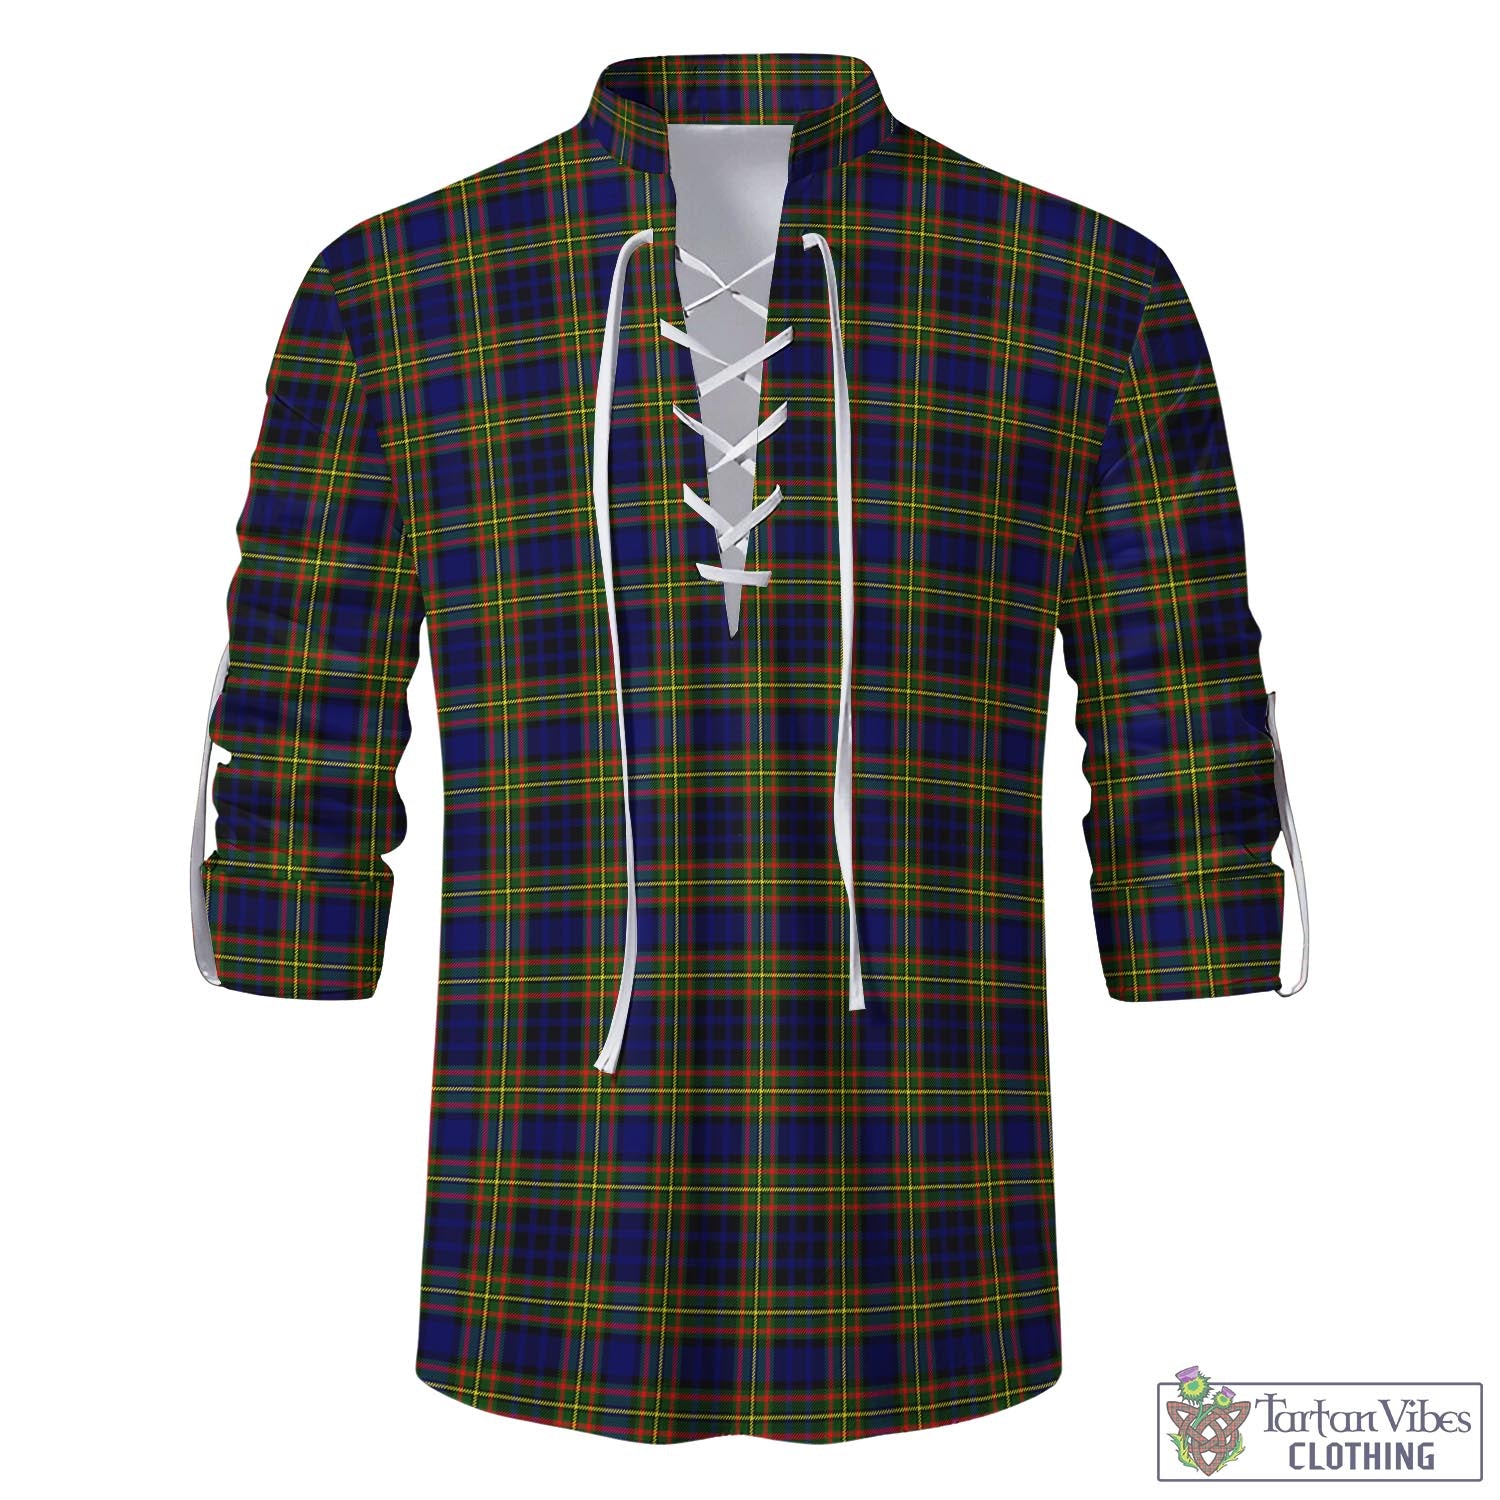 Tartan Vibes Clothing Clelland Modern Tartan Men's Scottish Traditional Jacobite Ghillie Kilt Shirt